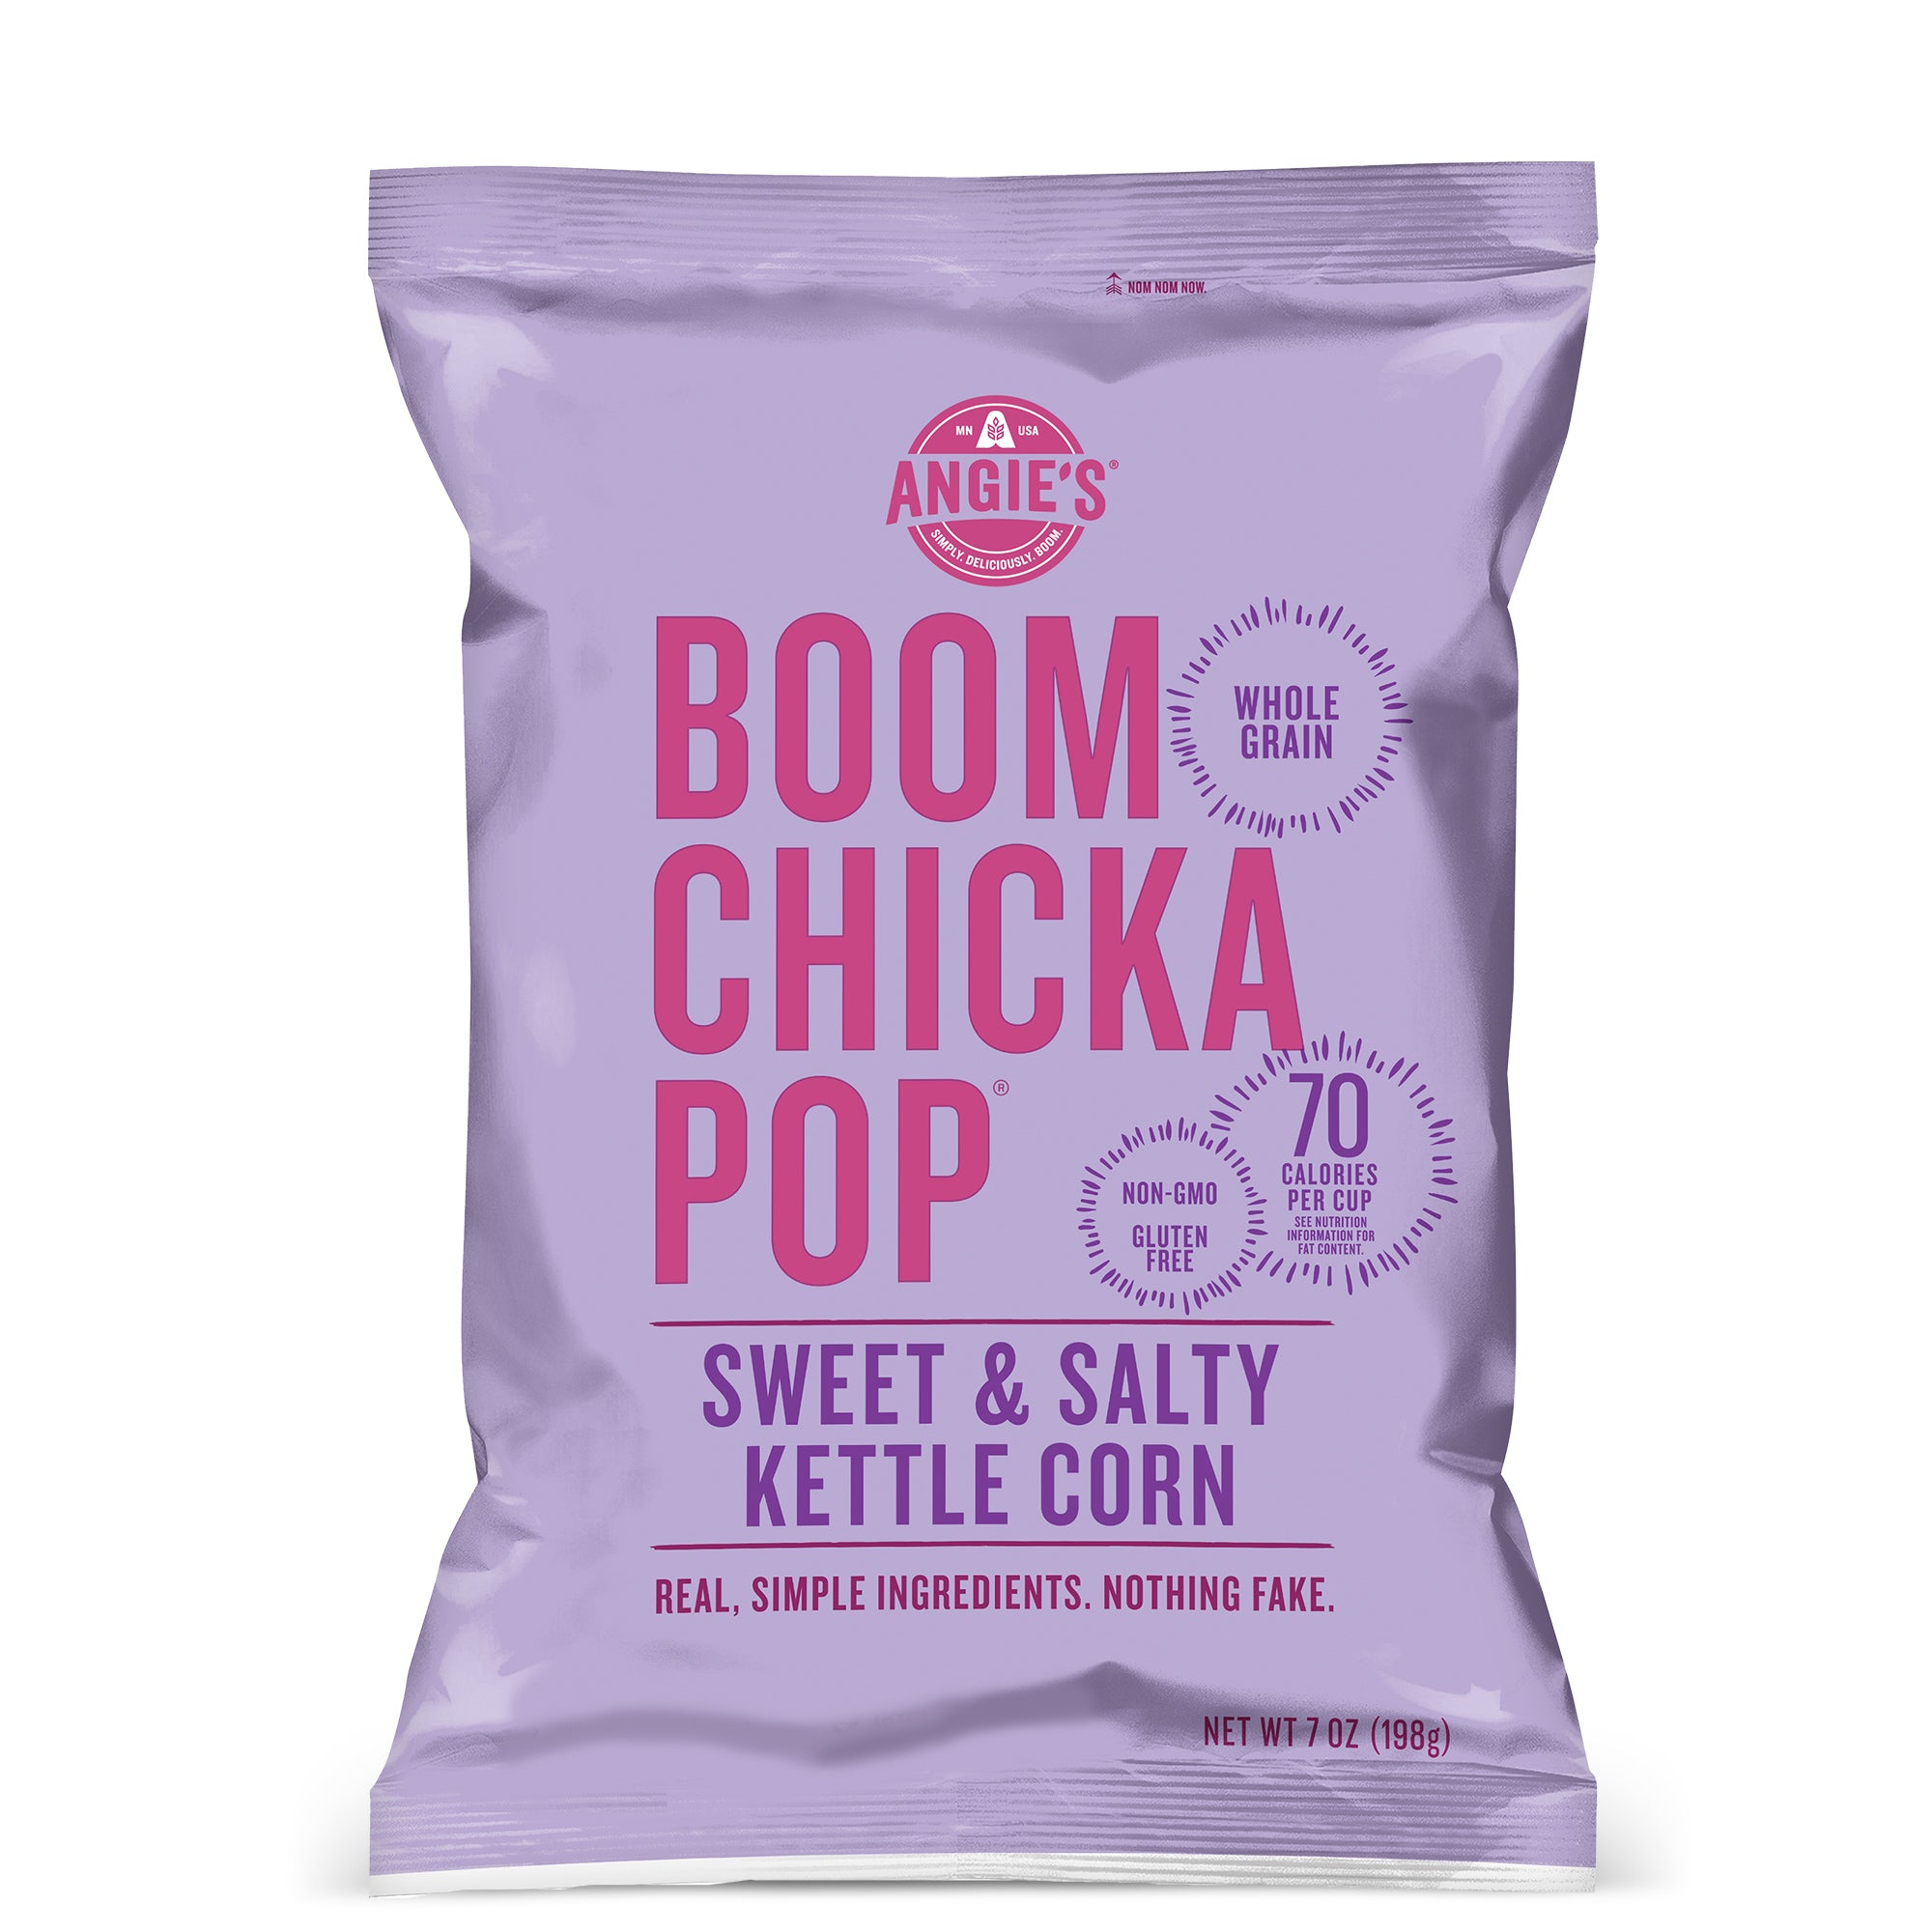 Angie's BoomChickaPop Sweet & Salty Kettle Corn Popcorn, Pre-Popped Popcorn Bag